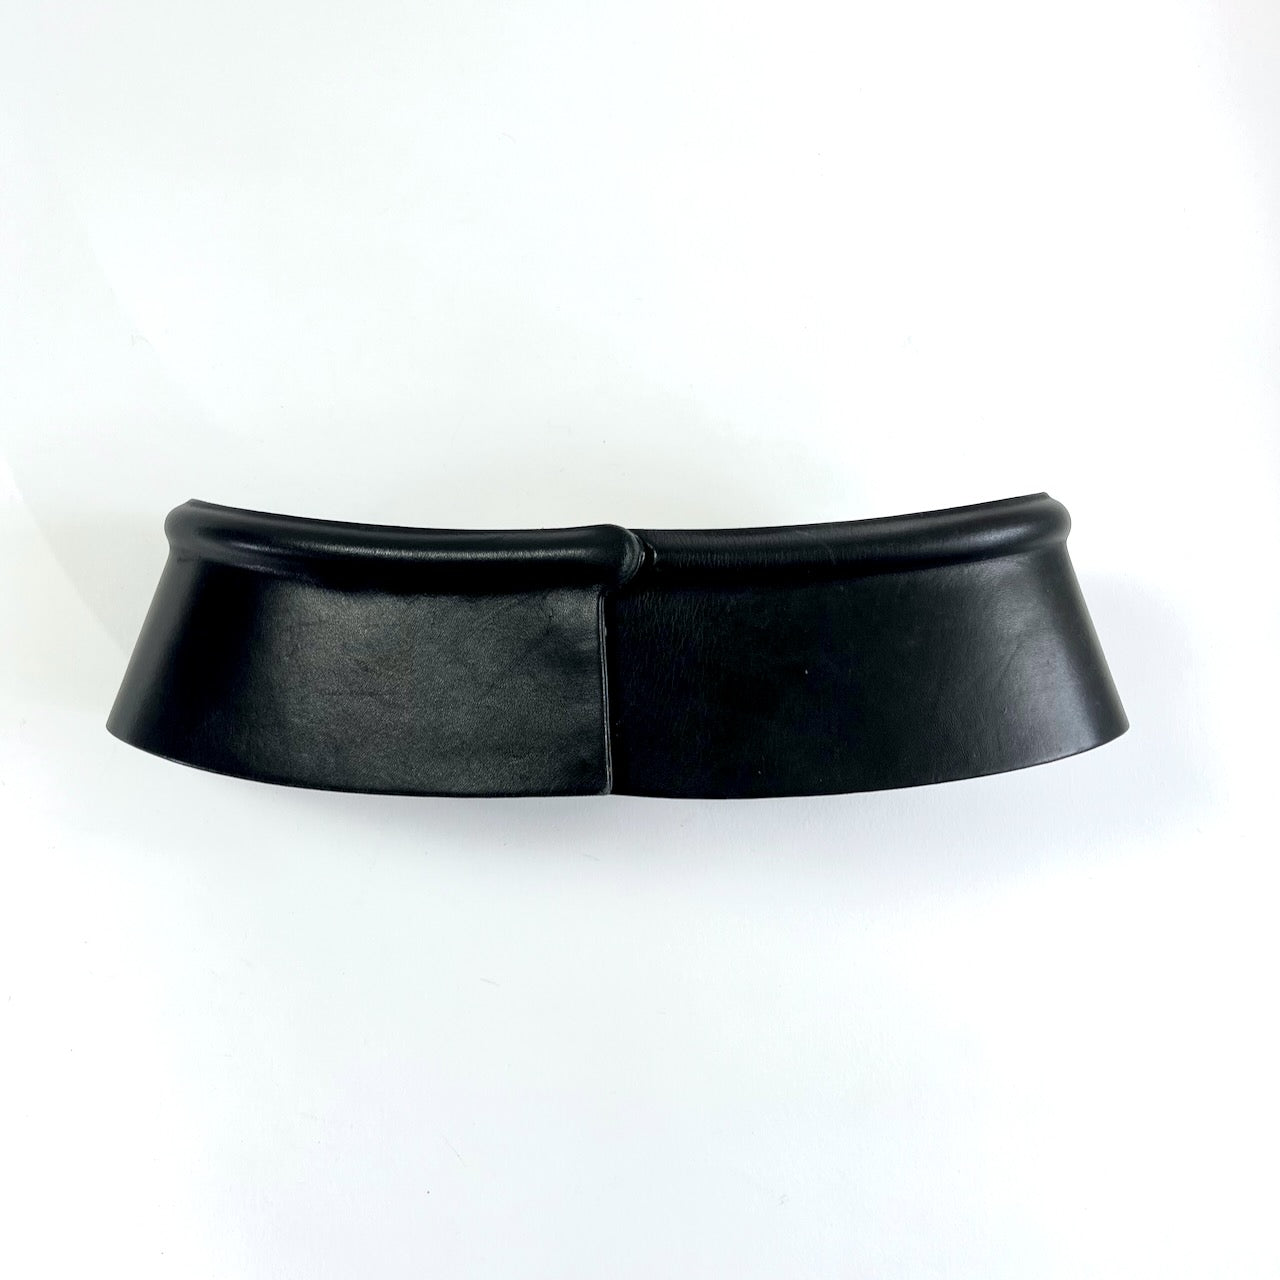 Vintage Jean Paul Gaultier black leather peplum belt